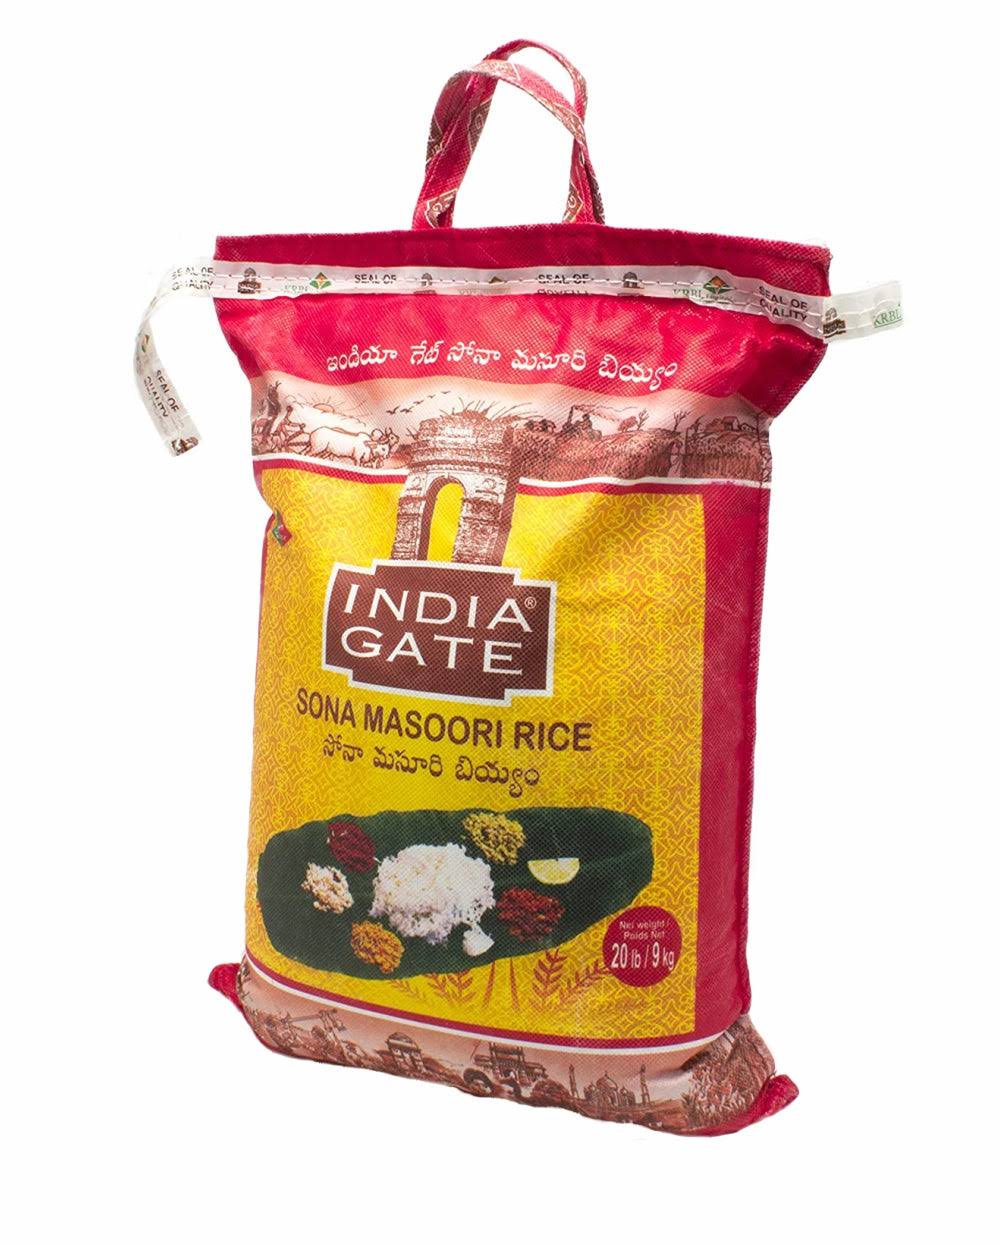 India Gate - Short Grain Rice - Sonamasoori, 20 Pound Bag